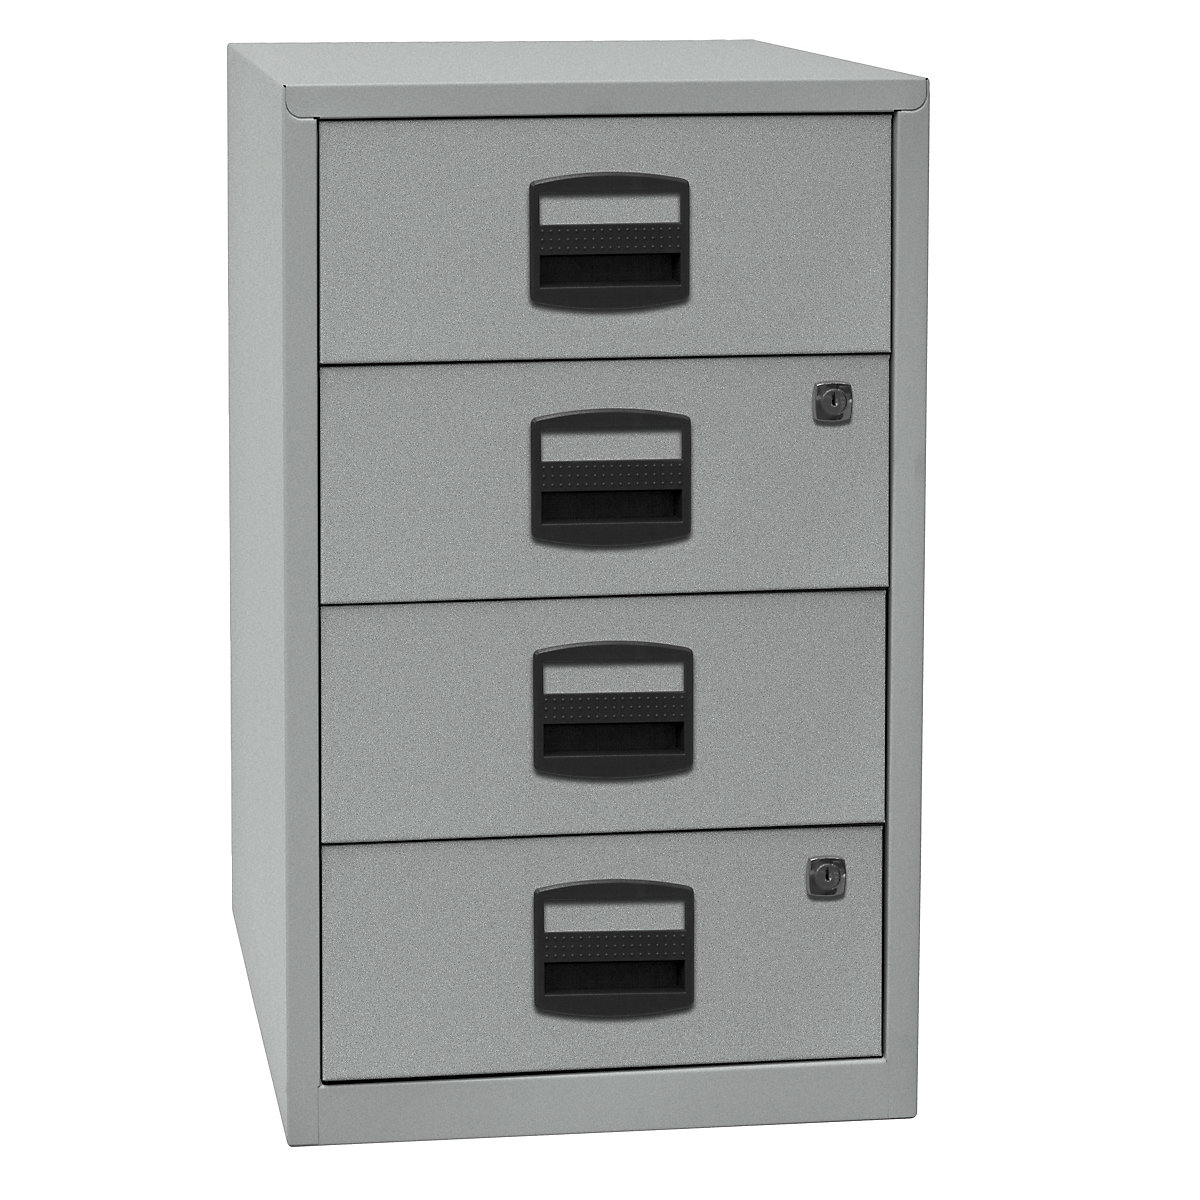 PFA side cupboard – BISLEY, 4 universal drawers, silver-6